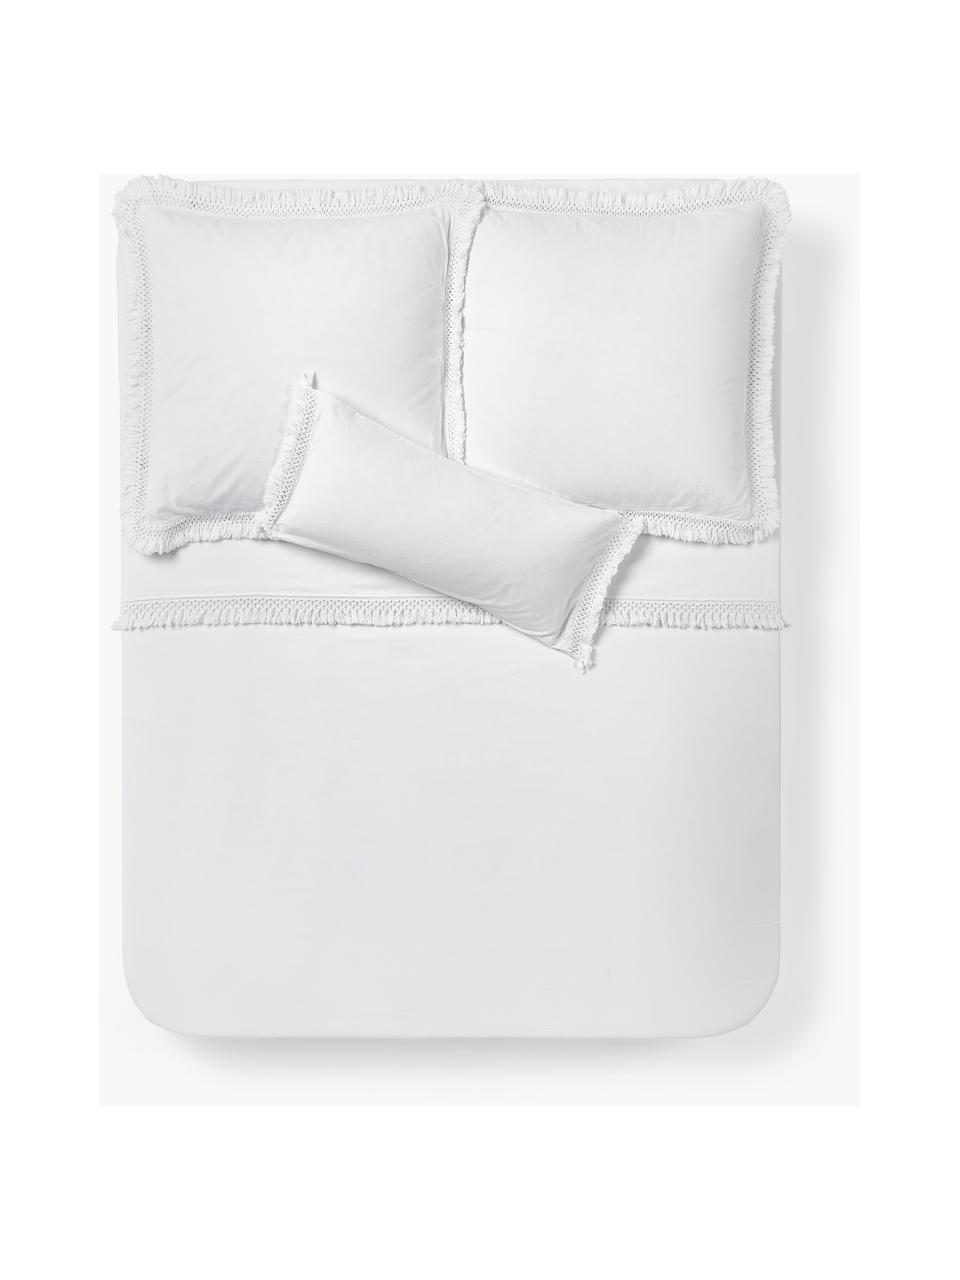 Drap plat en percale de coton Abra, Blanc, larg. 240 x long. 280 cm